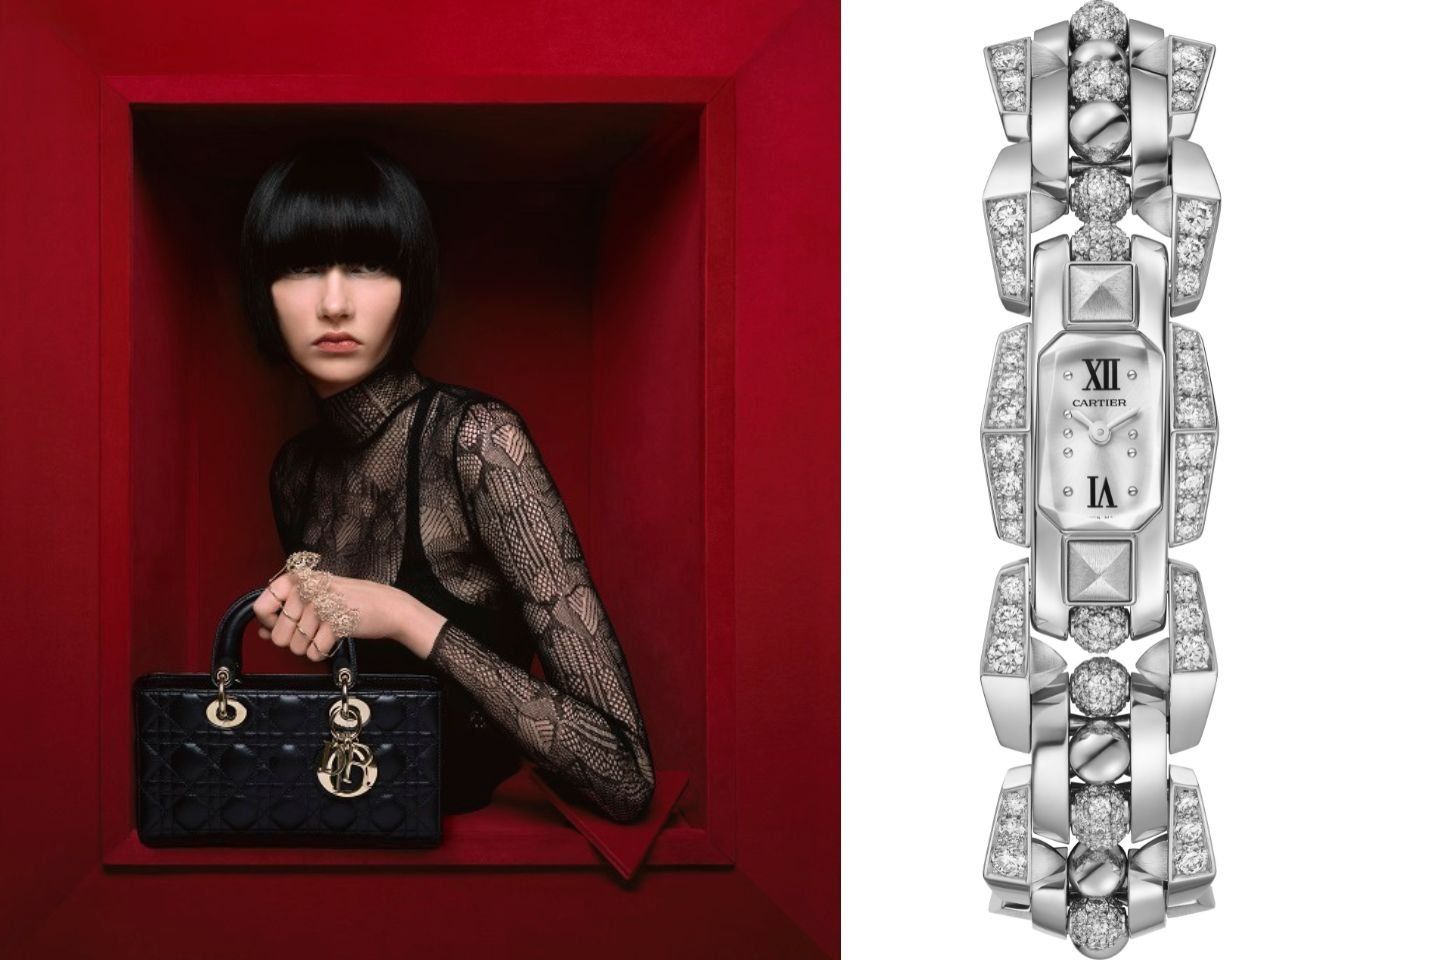 Dior + Cartier = chic, it girl, elegant 